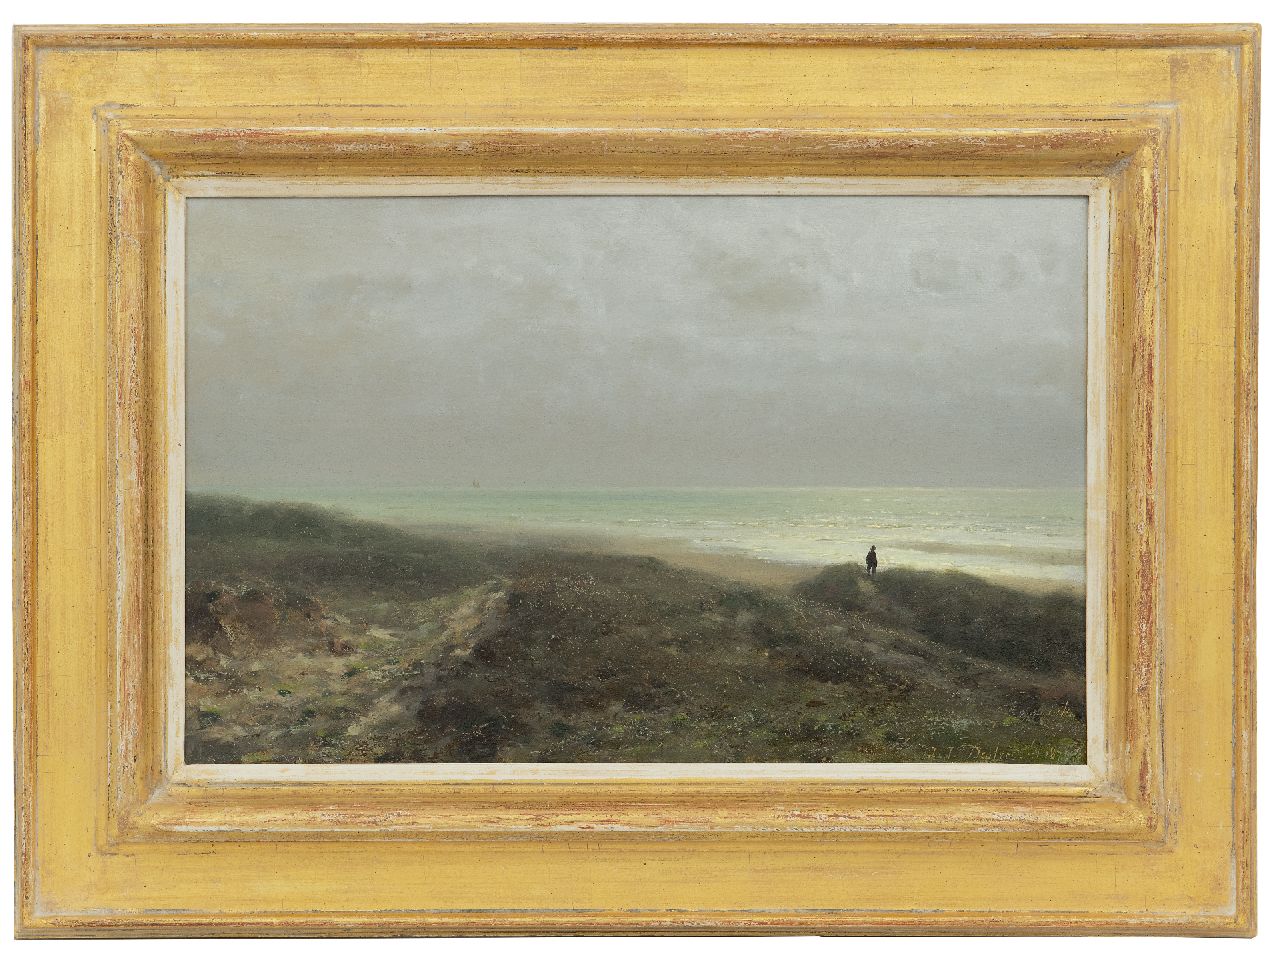 Destrée J.J.  | Johannes Josephus Destrée, Dünenlandschaft mit Spaziergänger der aussieht über das Meer, Öl auf Holz 27,6 x 43,8 cm, Unterzeichnet u.r. und datiert 1879